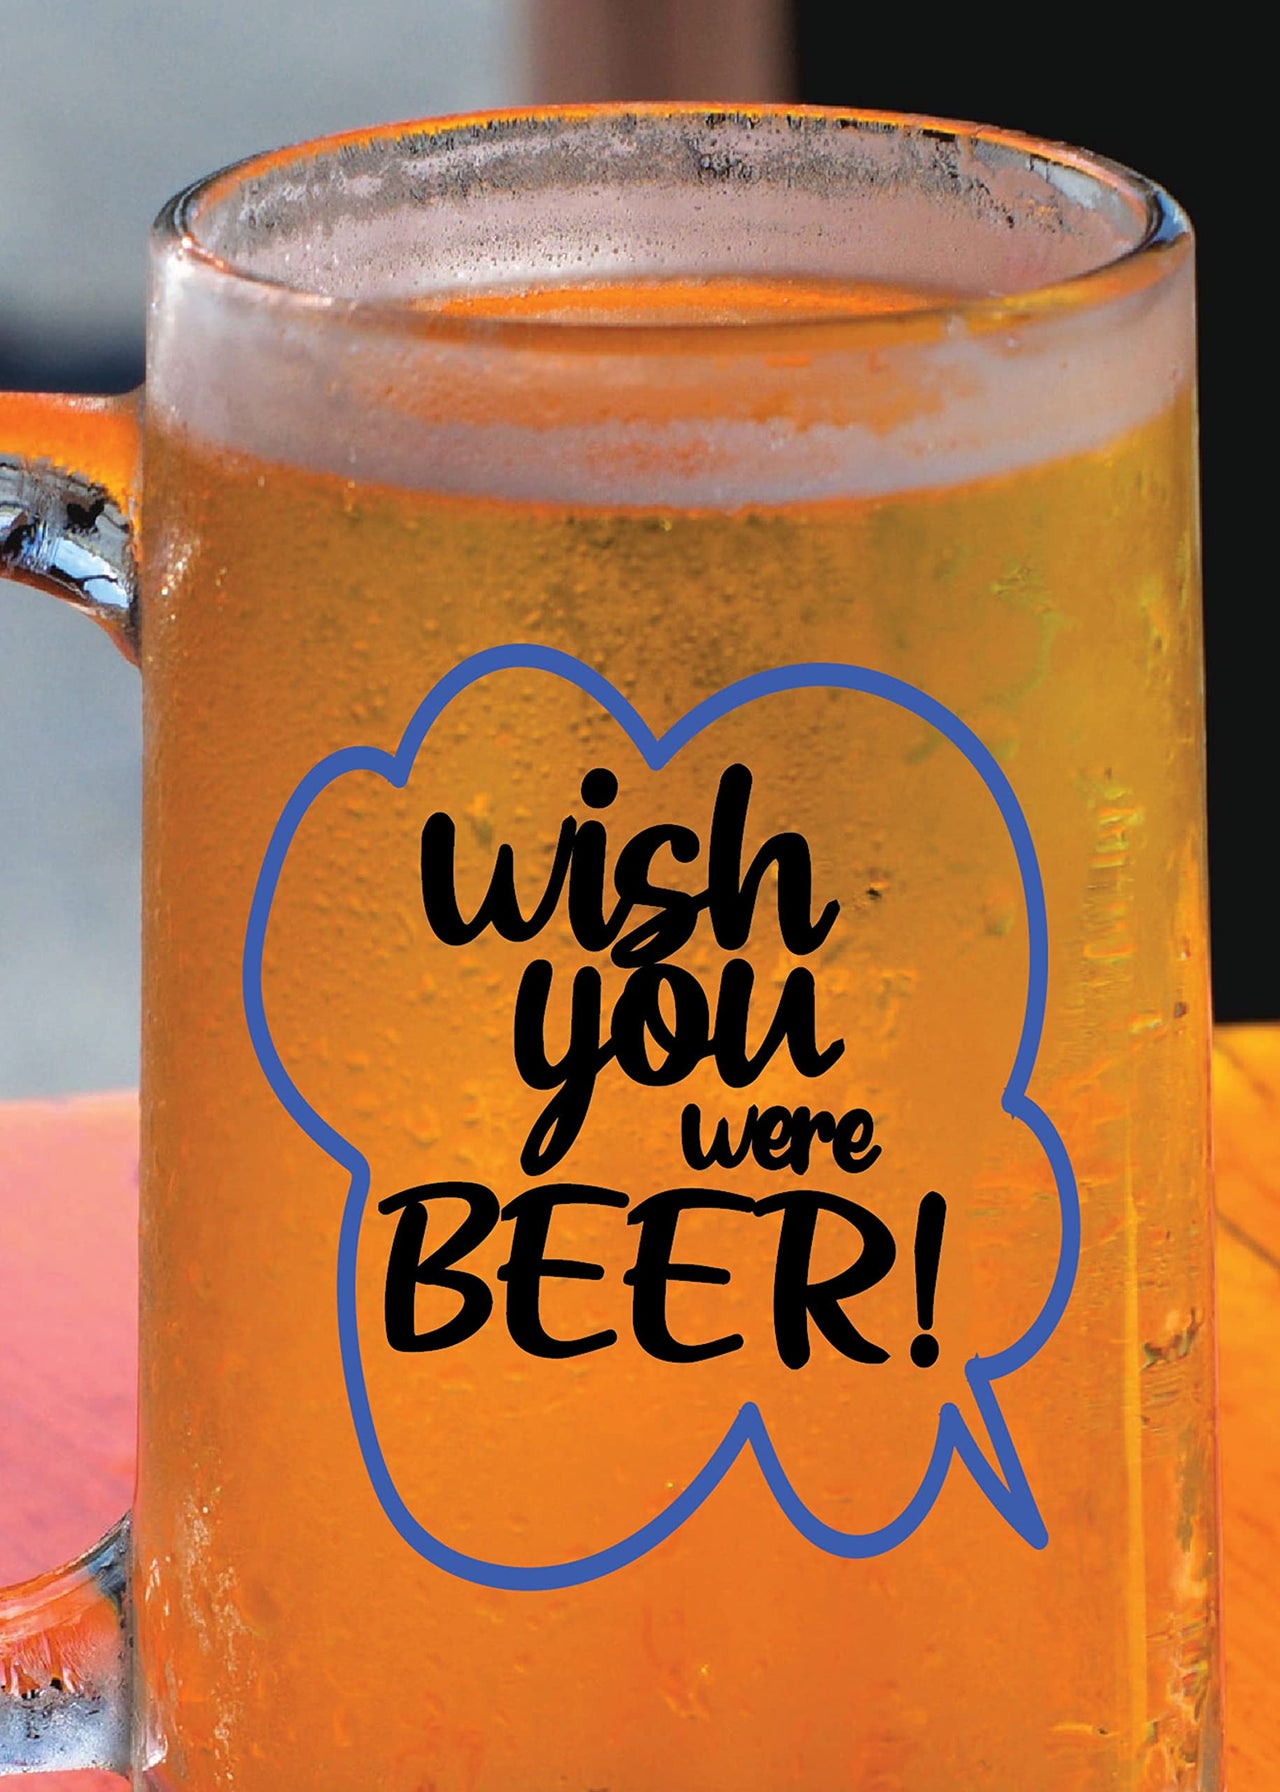 Wish You were Beer - Beer Mug -1 Piece, Clear, 500 ml - Transparent Glass Beer Mug -Printed Beer Mug with Handle Gift for Men Dad